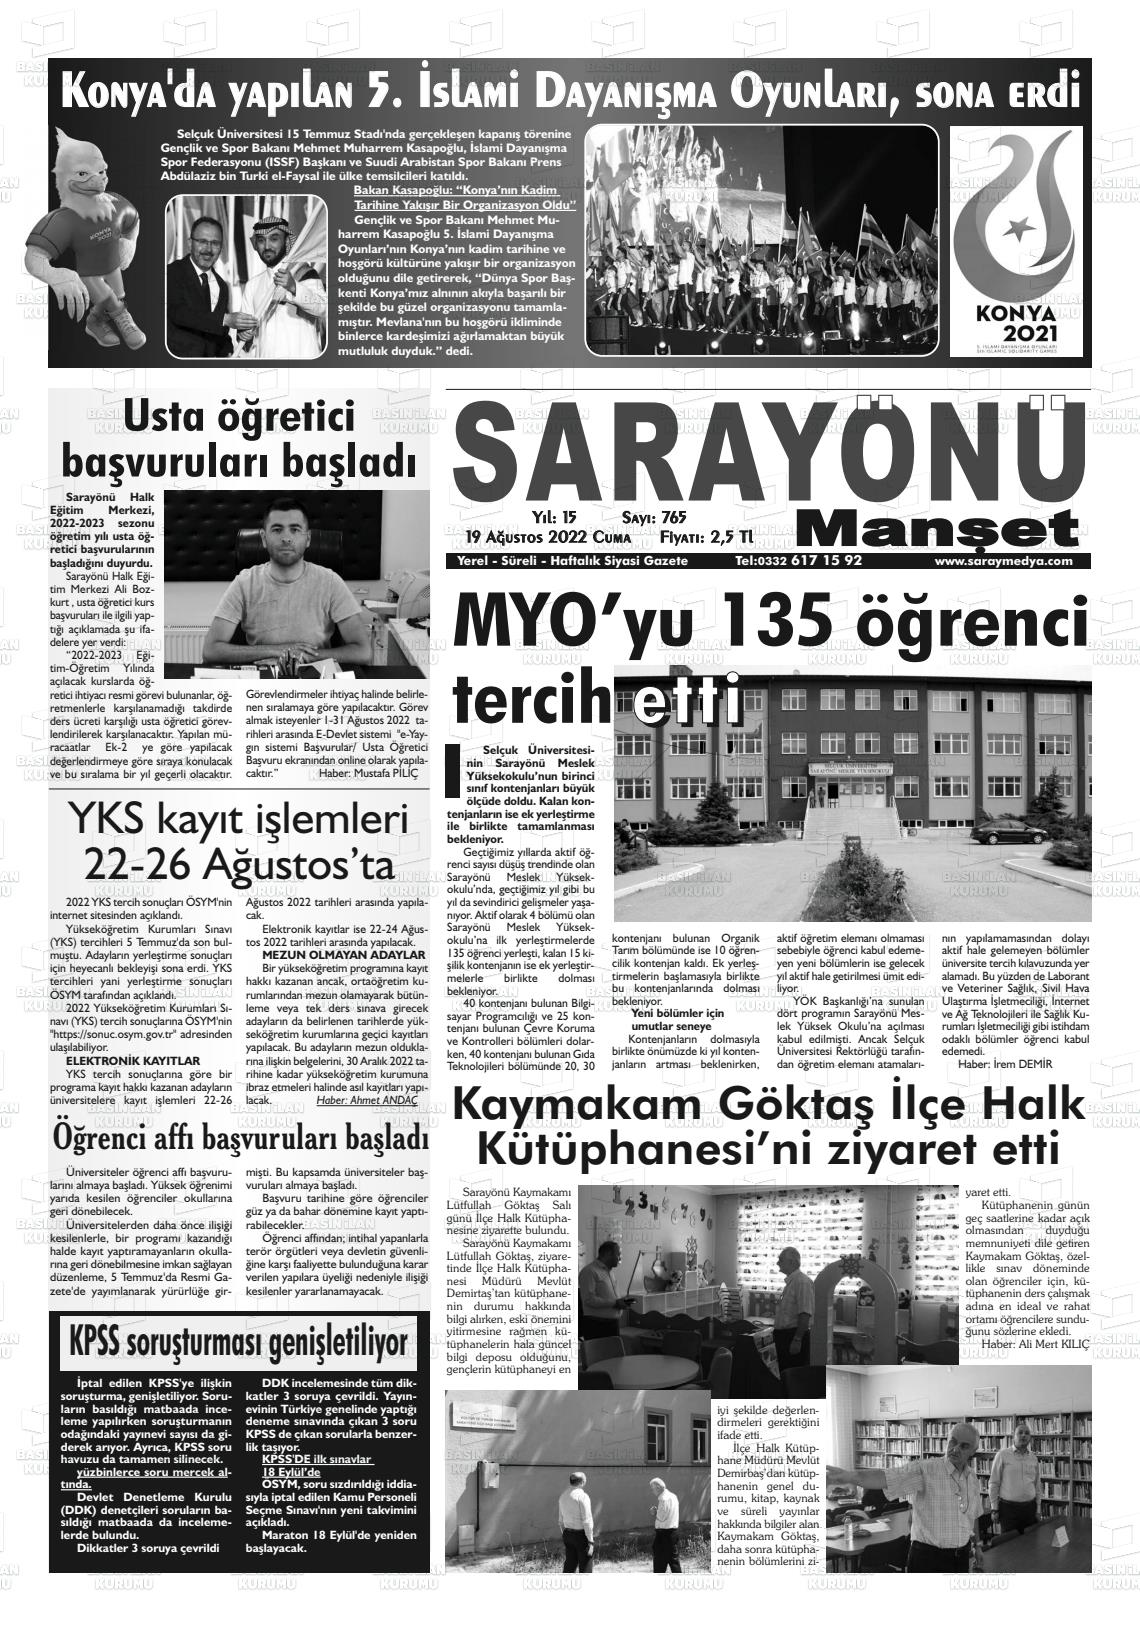 19 Ağustos 2022 Saray Medya Gazete Manşeti